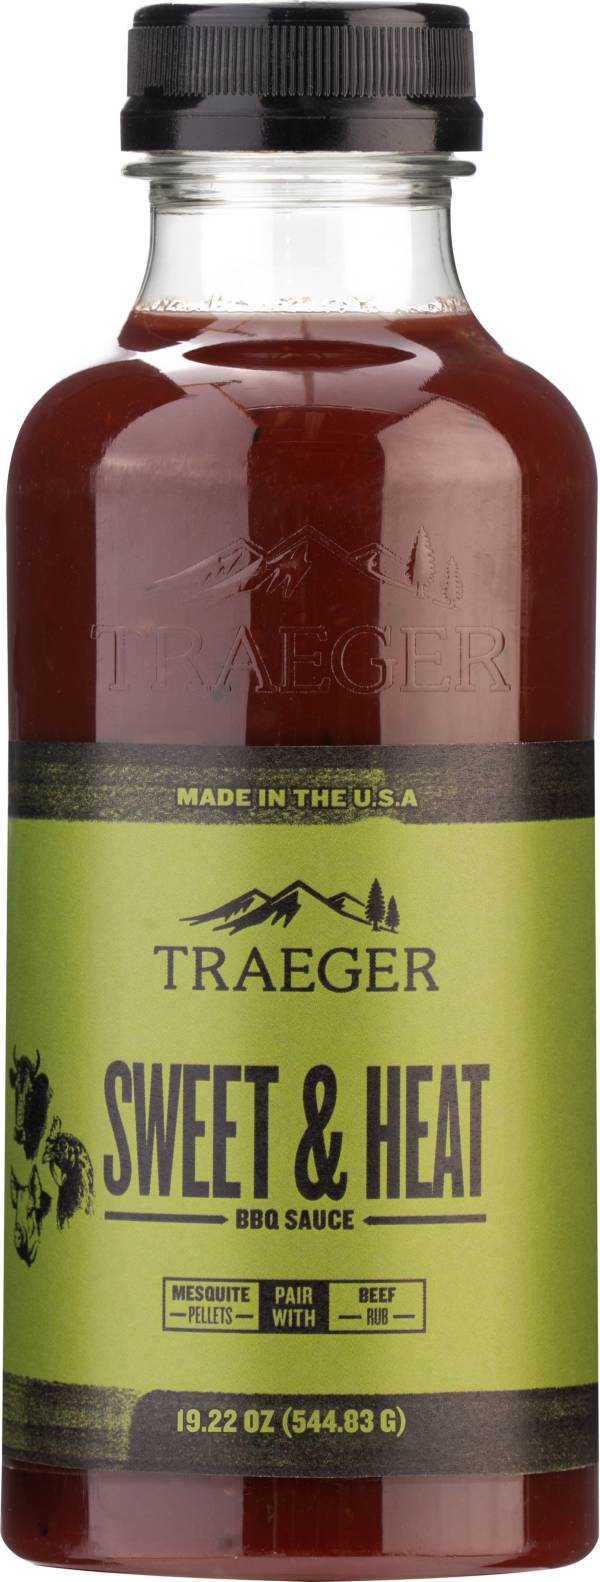 Traeger Sweet & Heat BBQ Sauce product image